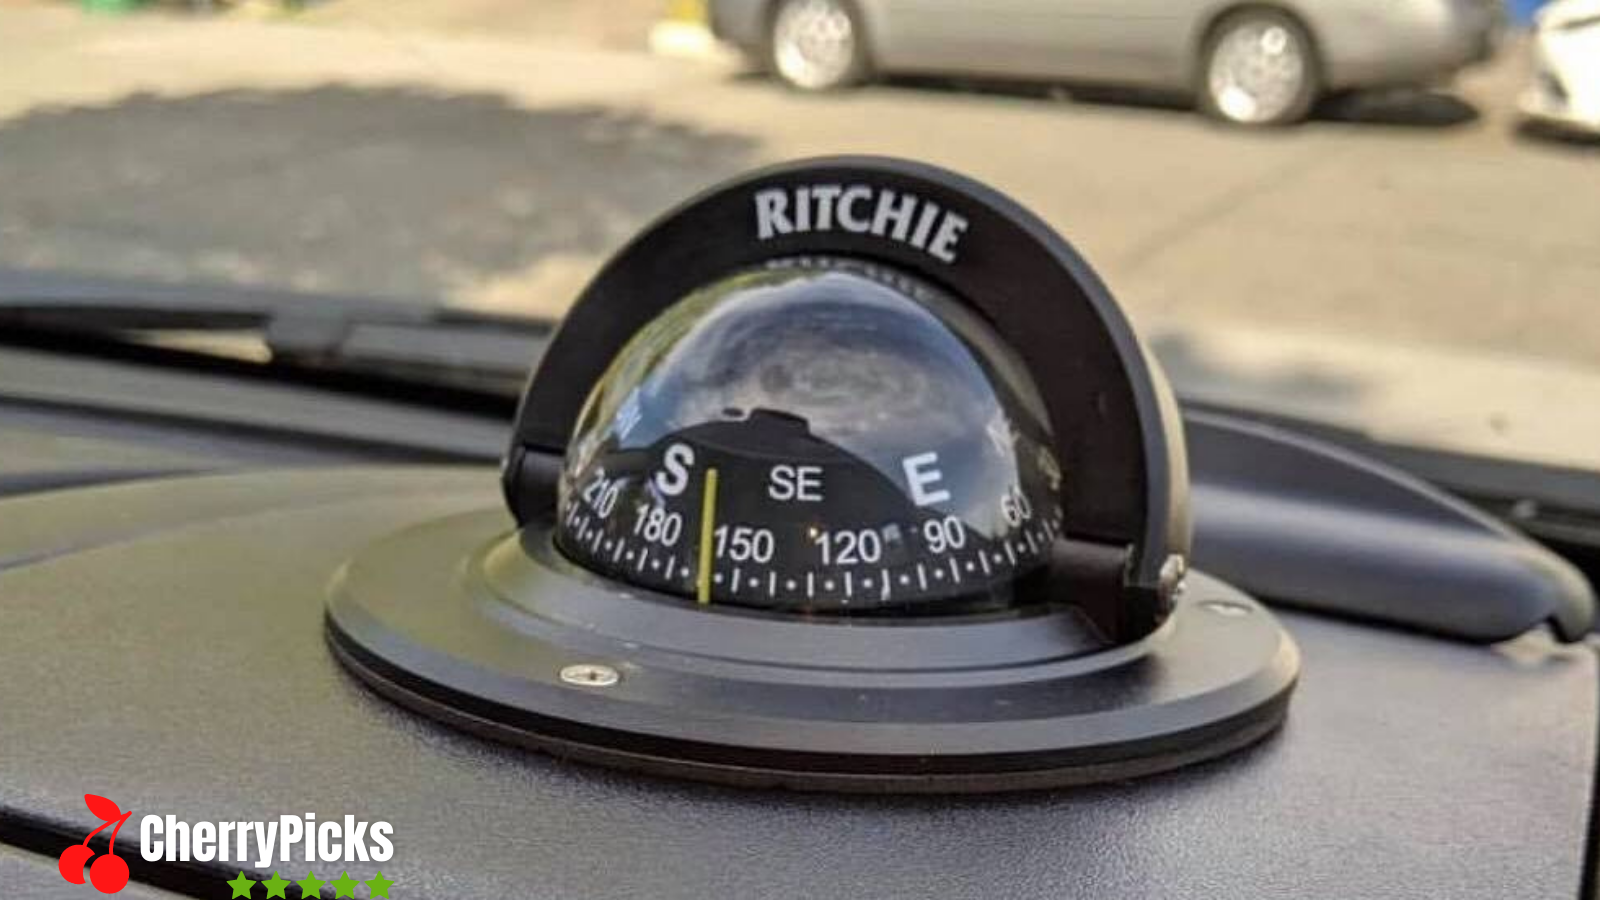 IQQI 2-in-1 Car Interior Dashboard Compass Thermometer for Car Ornament 